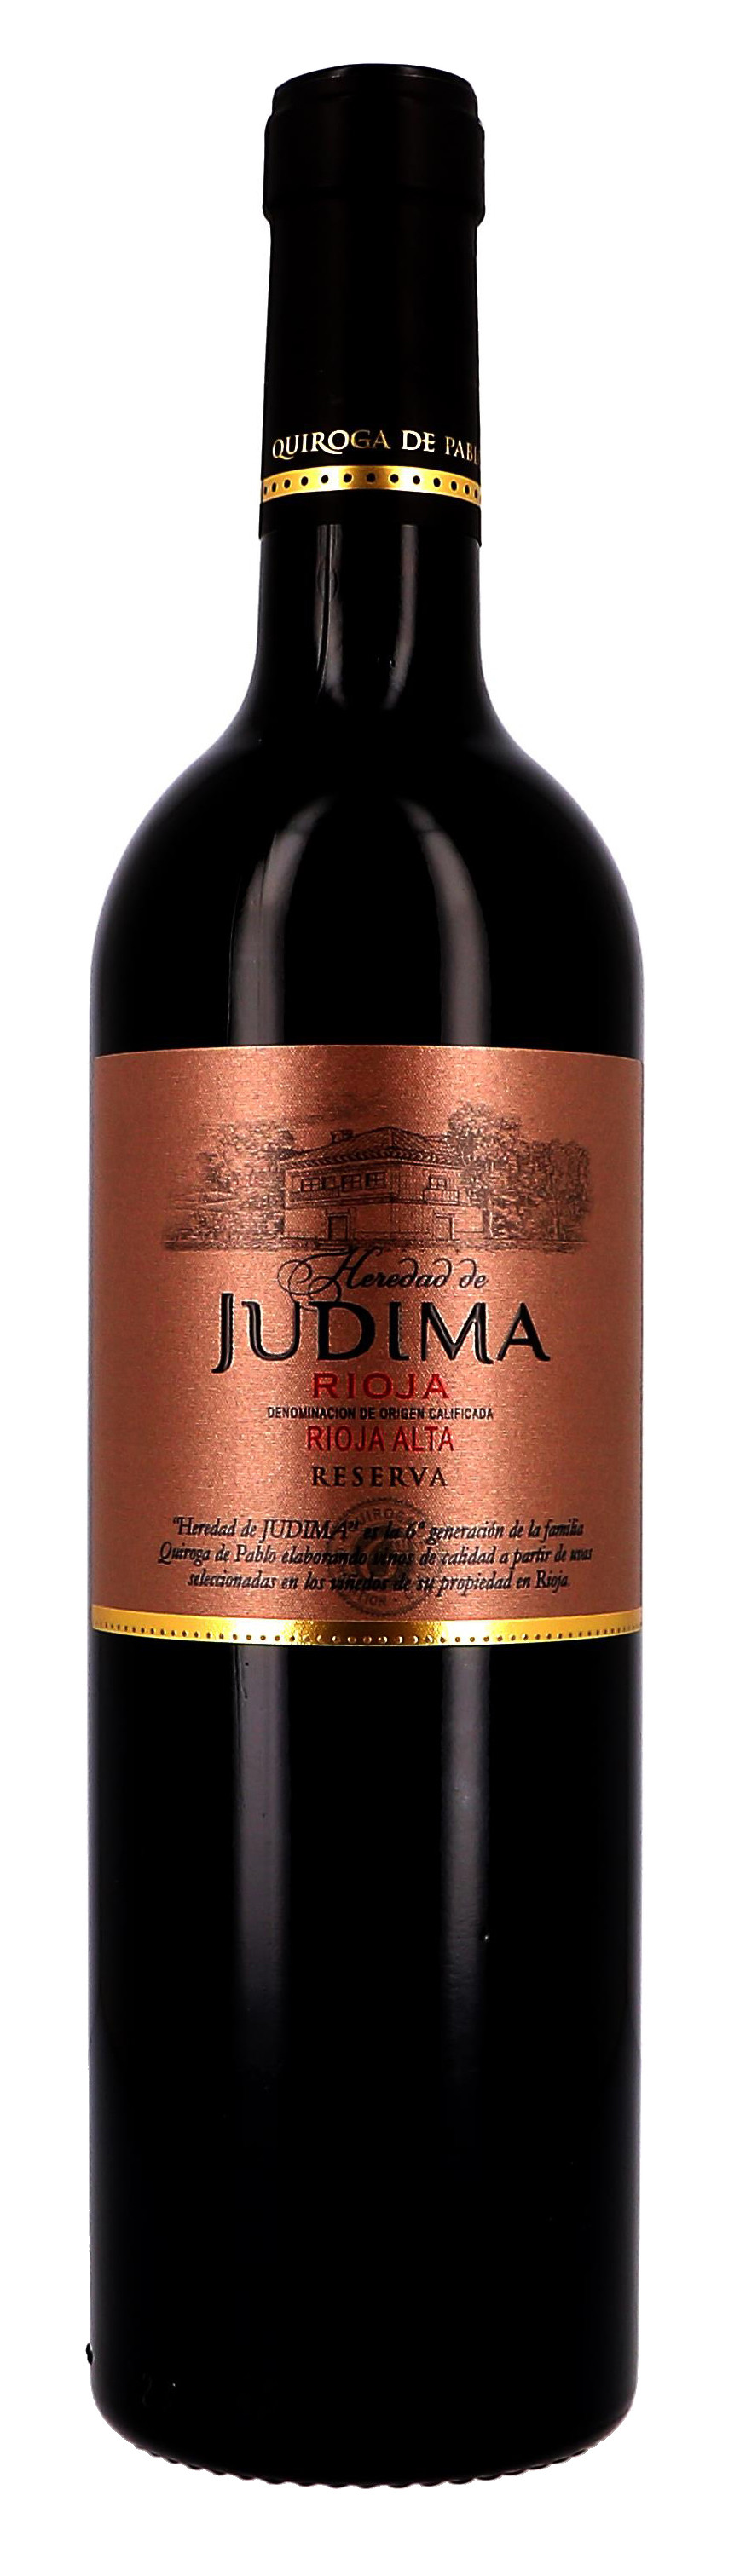 Heredad de Judima Reserva tinto 75cl Rioja Bodegas Quiroga de Pablo